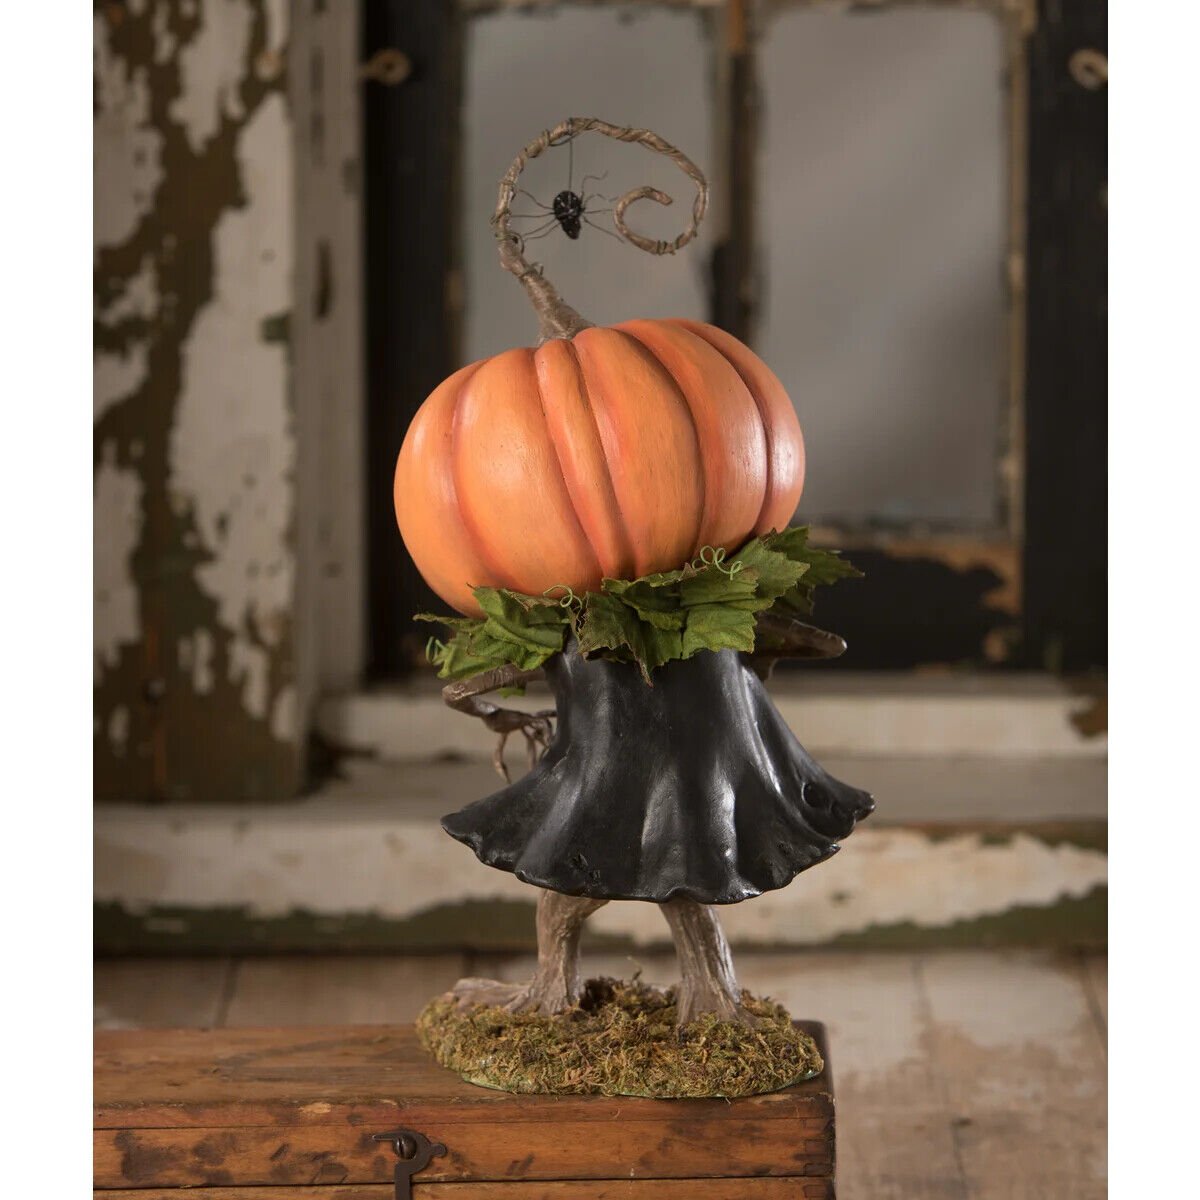 Bethany Lowe Halloween Treats Pumpkin Girl TD0064 - The Primitive Pineapple Collection